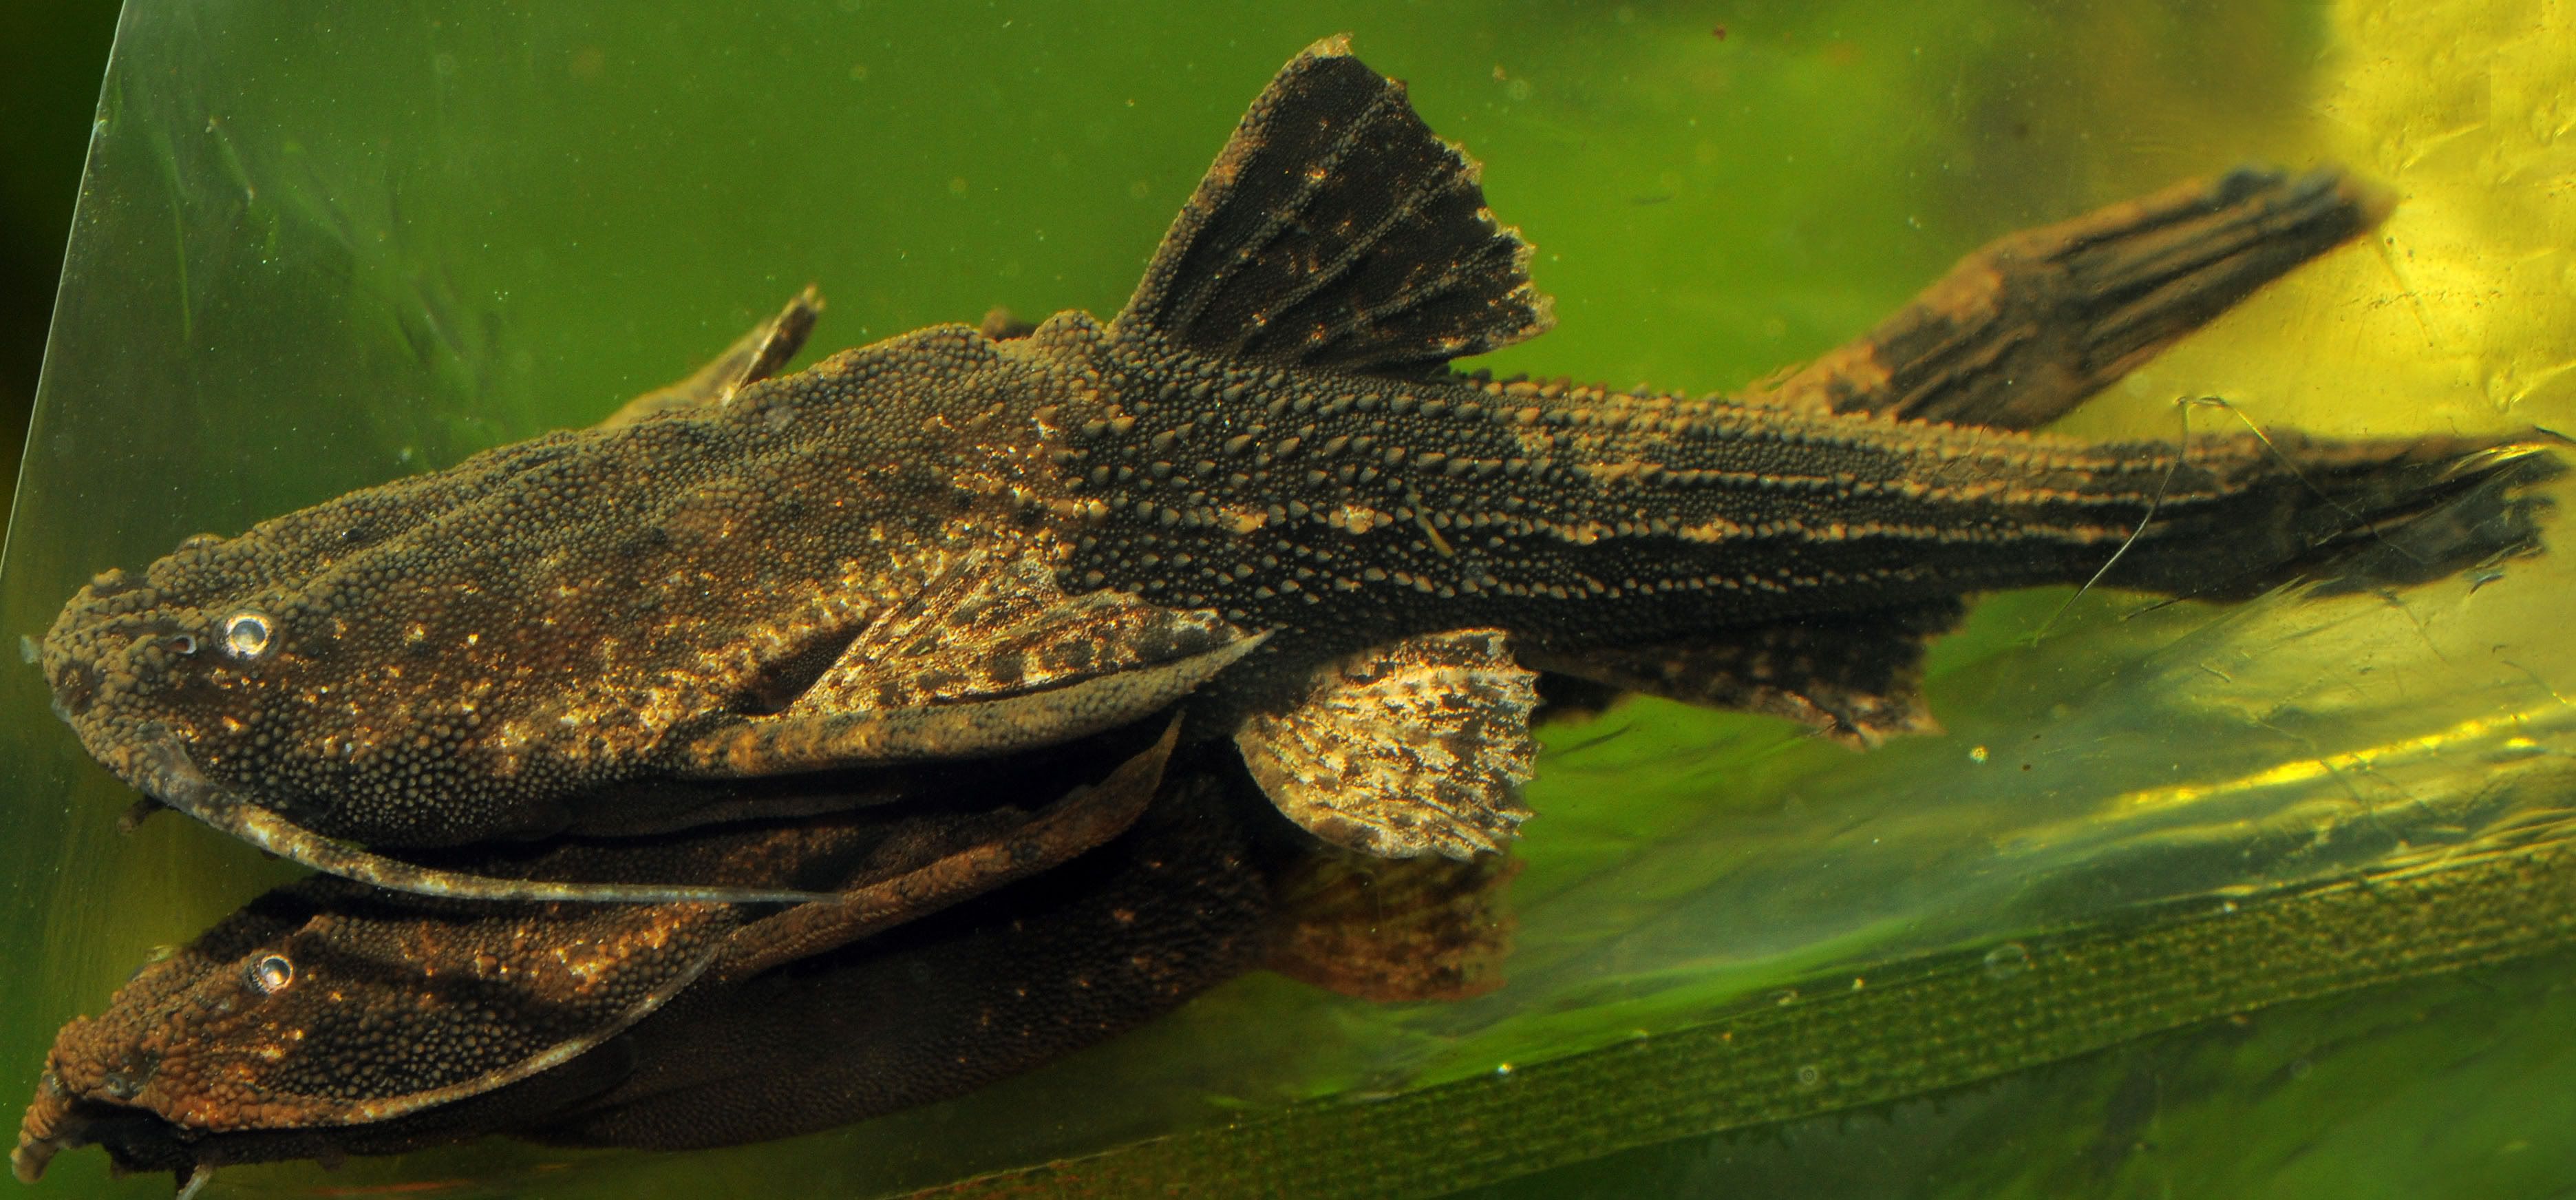 Bunocephalus coracoideus - Banjo Catfish | Future Pets | Pinterest ...